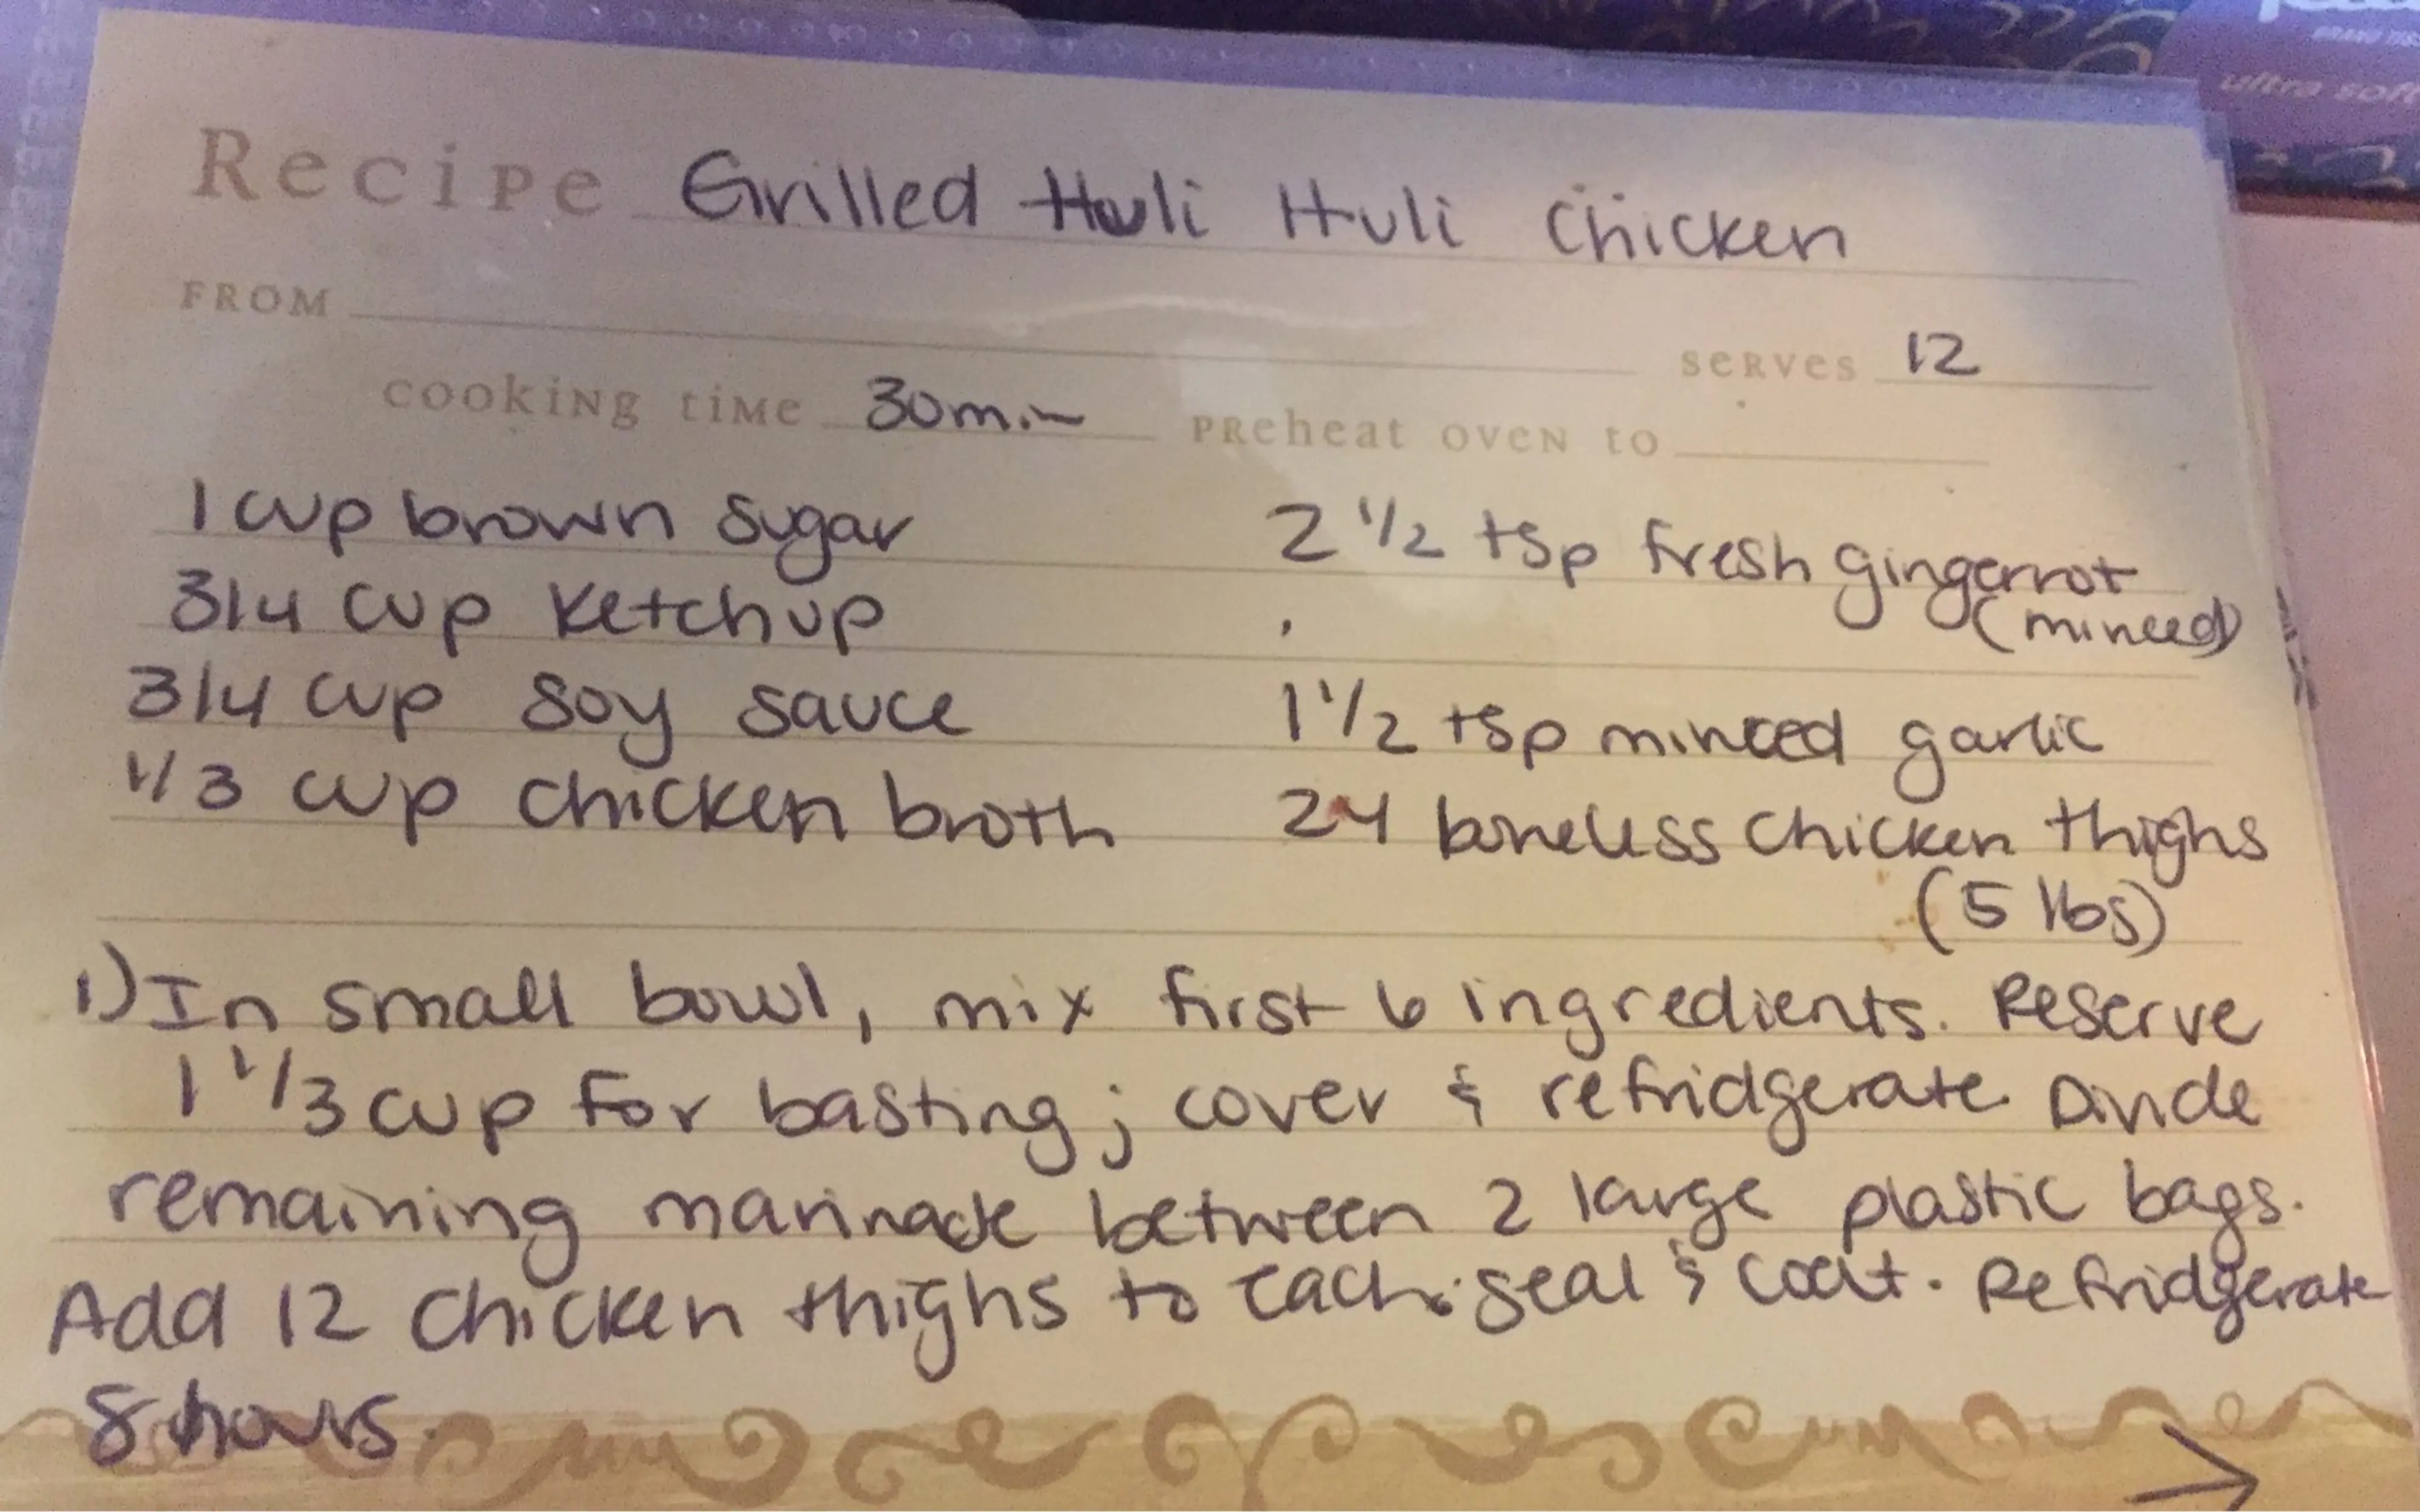 Grilled Huli Huli Chicken